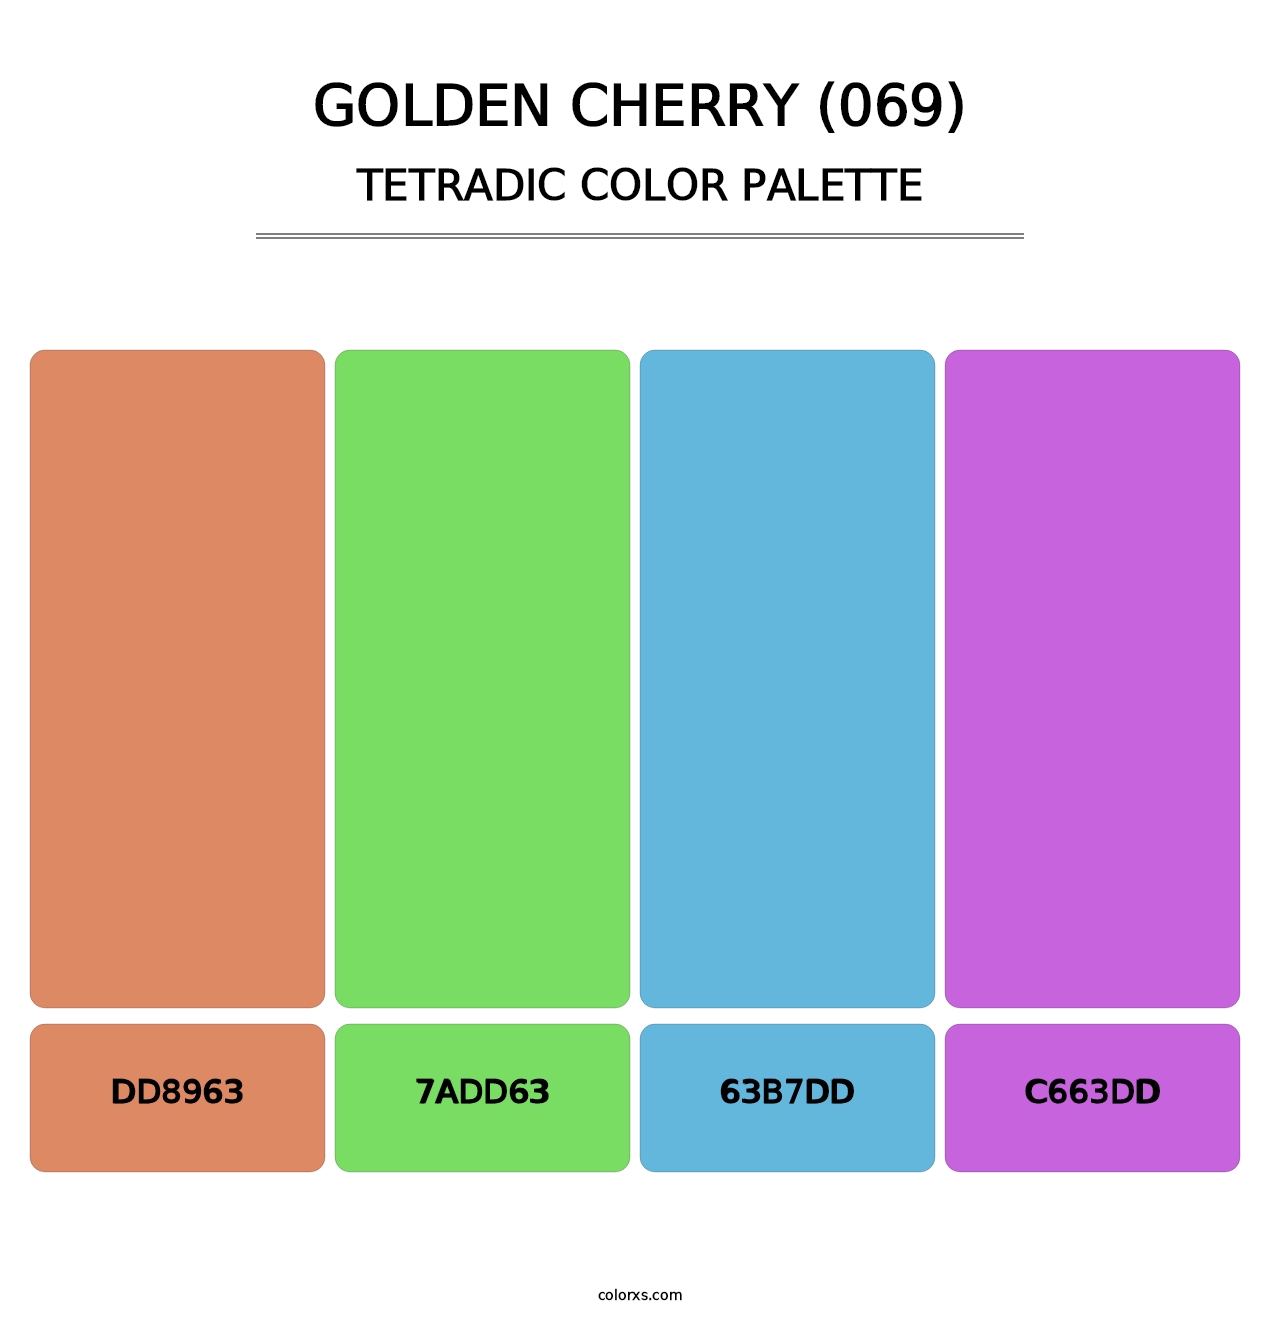 Golden Cherry (069) - Tetradic Color Palette